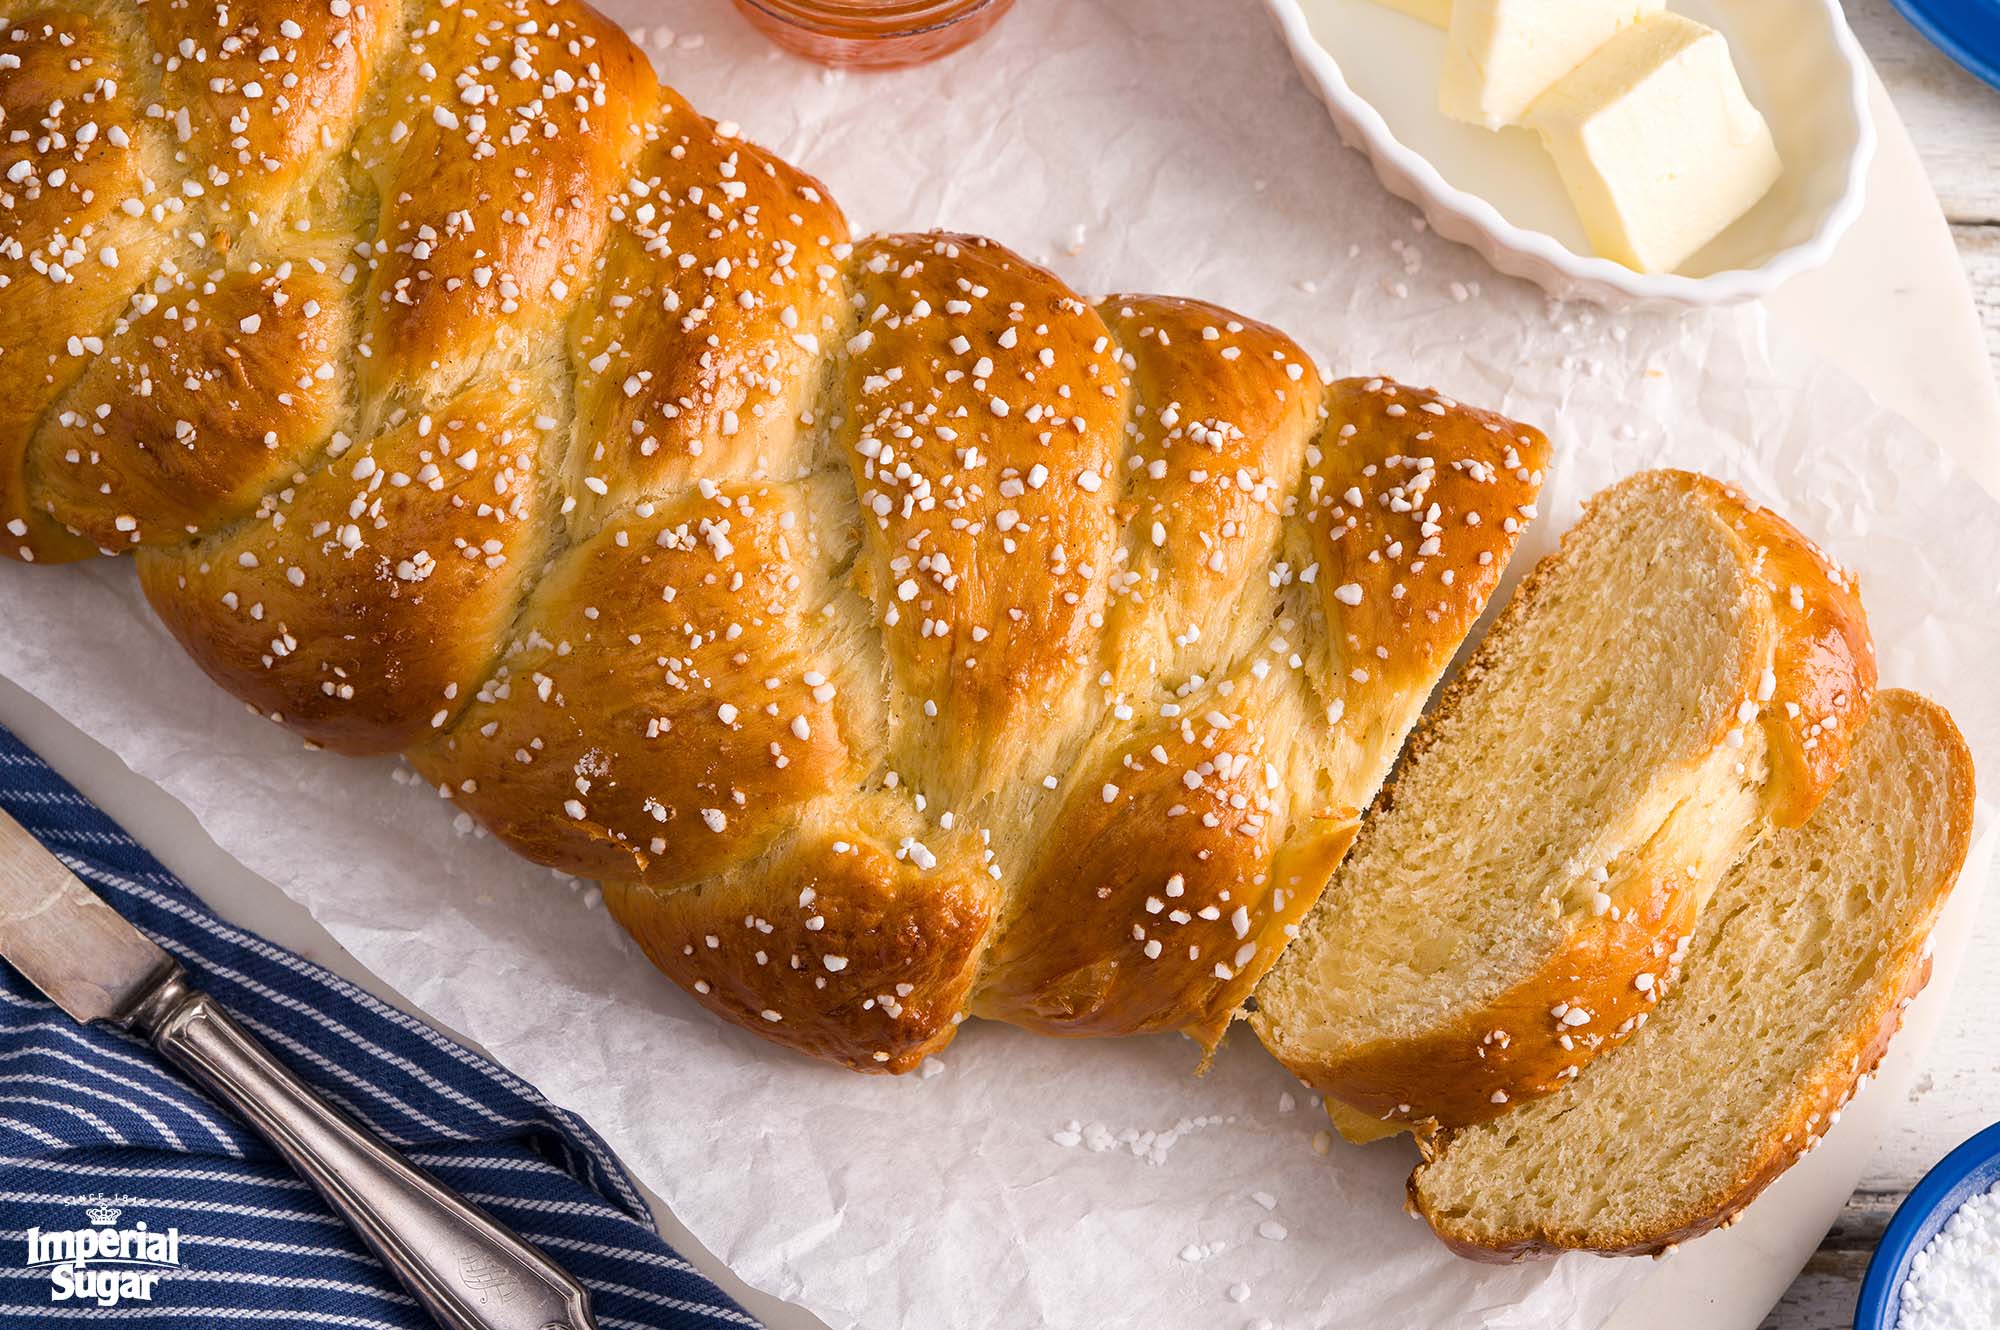 Braided Christmas Bread (Hefekranz) Recipe